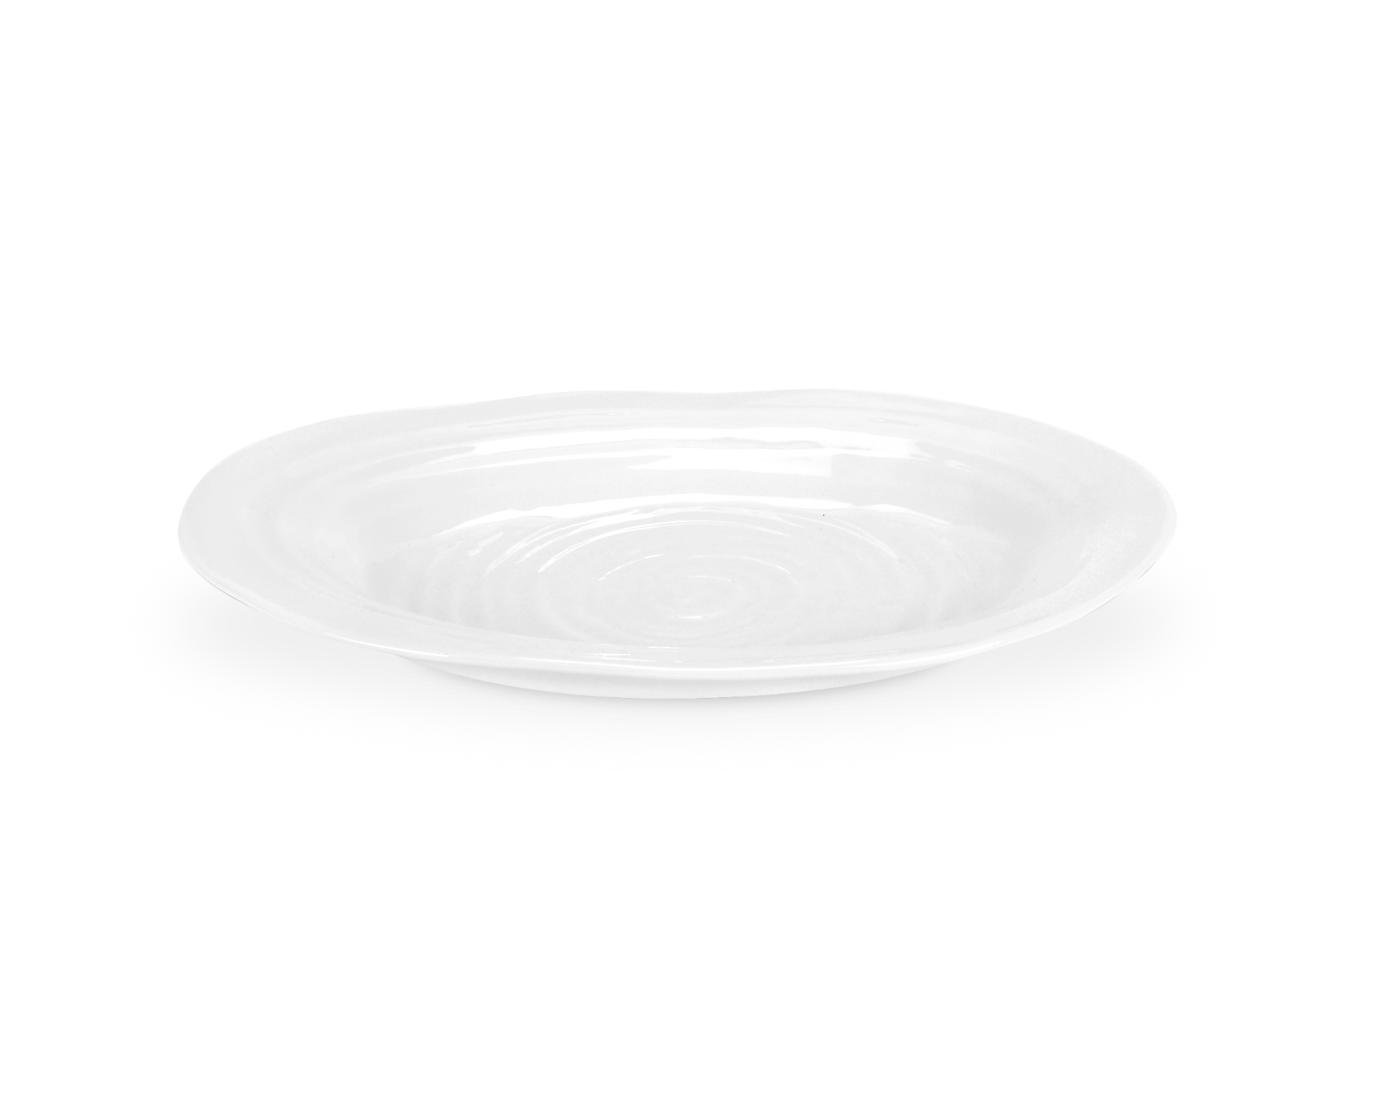 9226- Small Oval Platter- White- $25